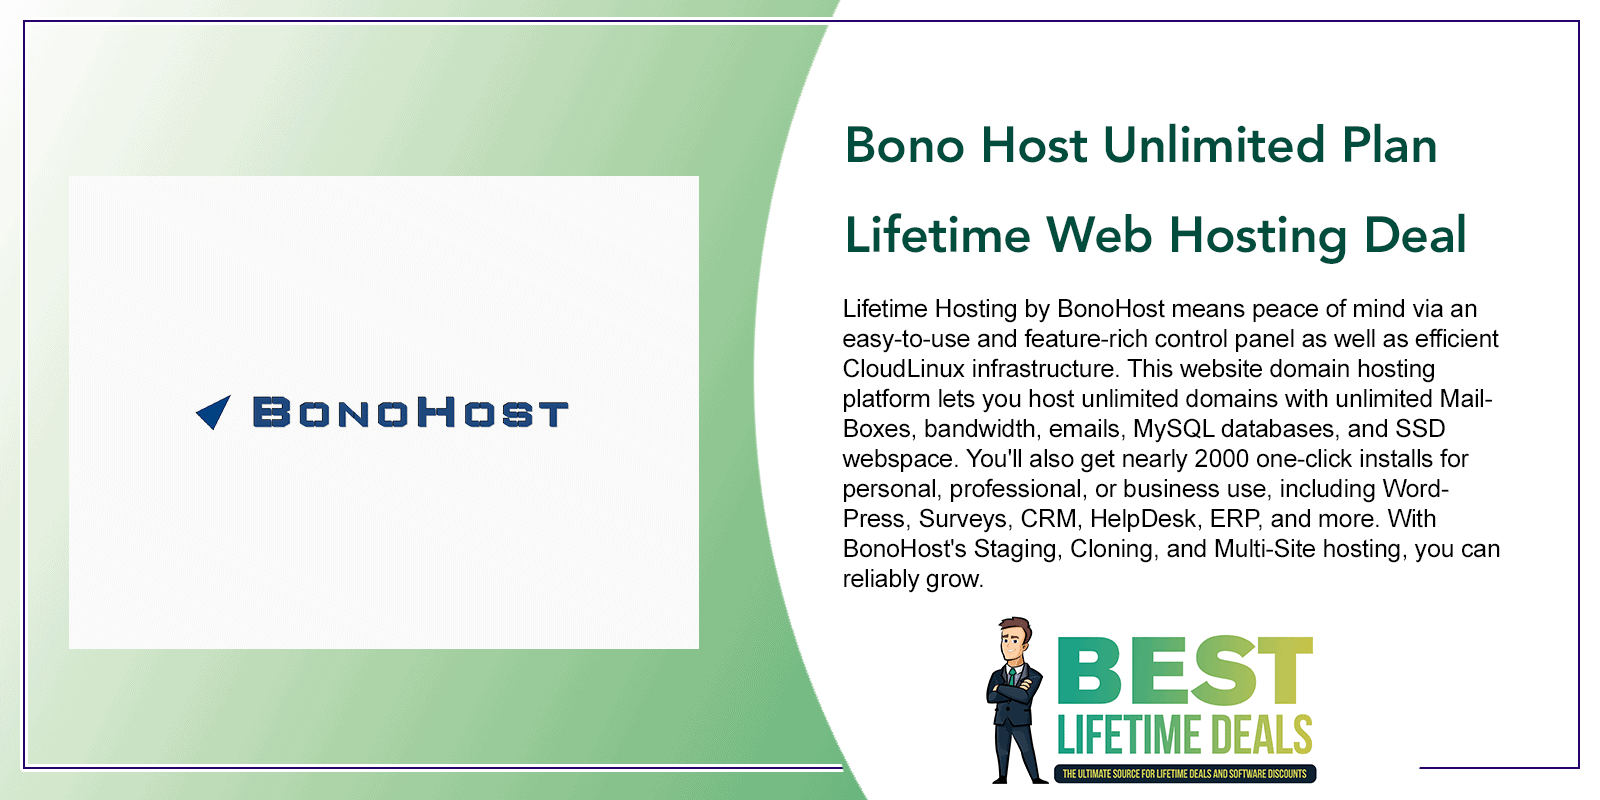 Bono Host Unlimited Plan Lifetime Web Hosting Deal Post Image